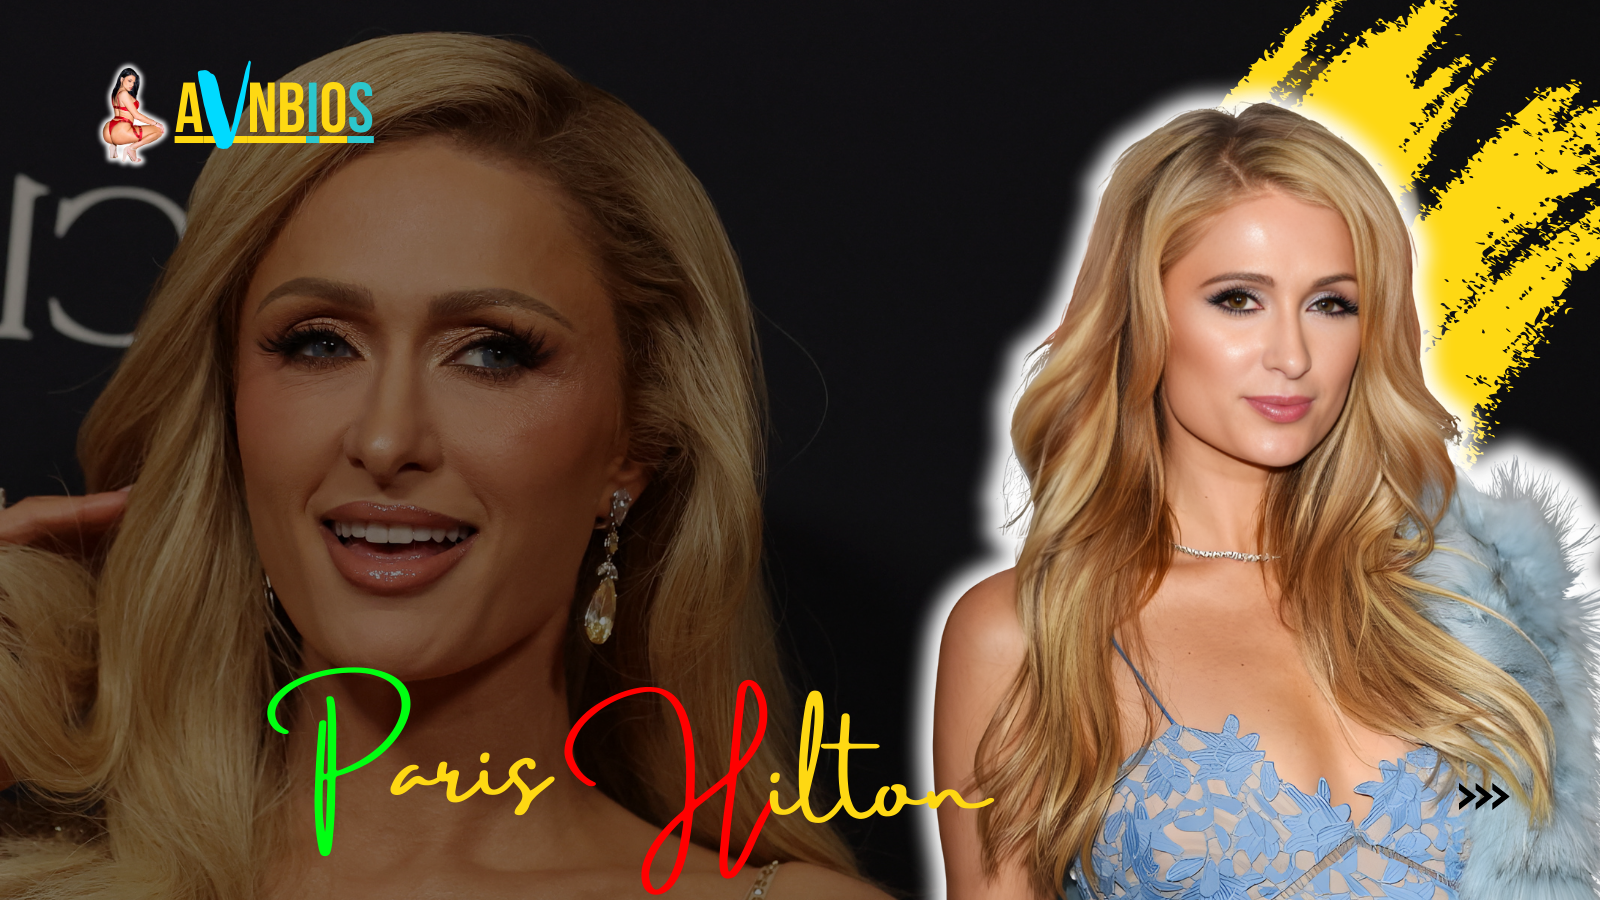 Paris Hilton Biography